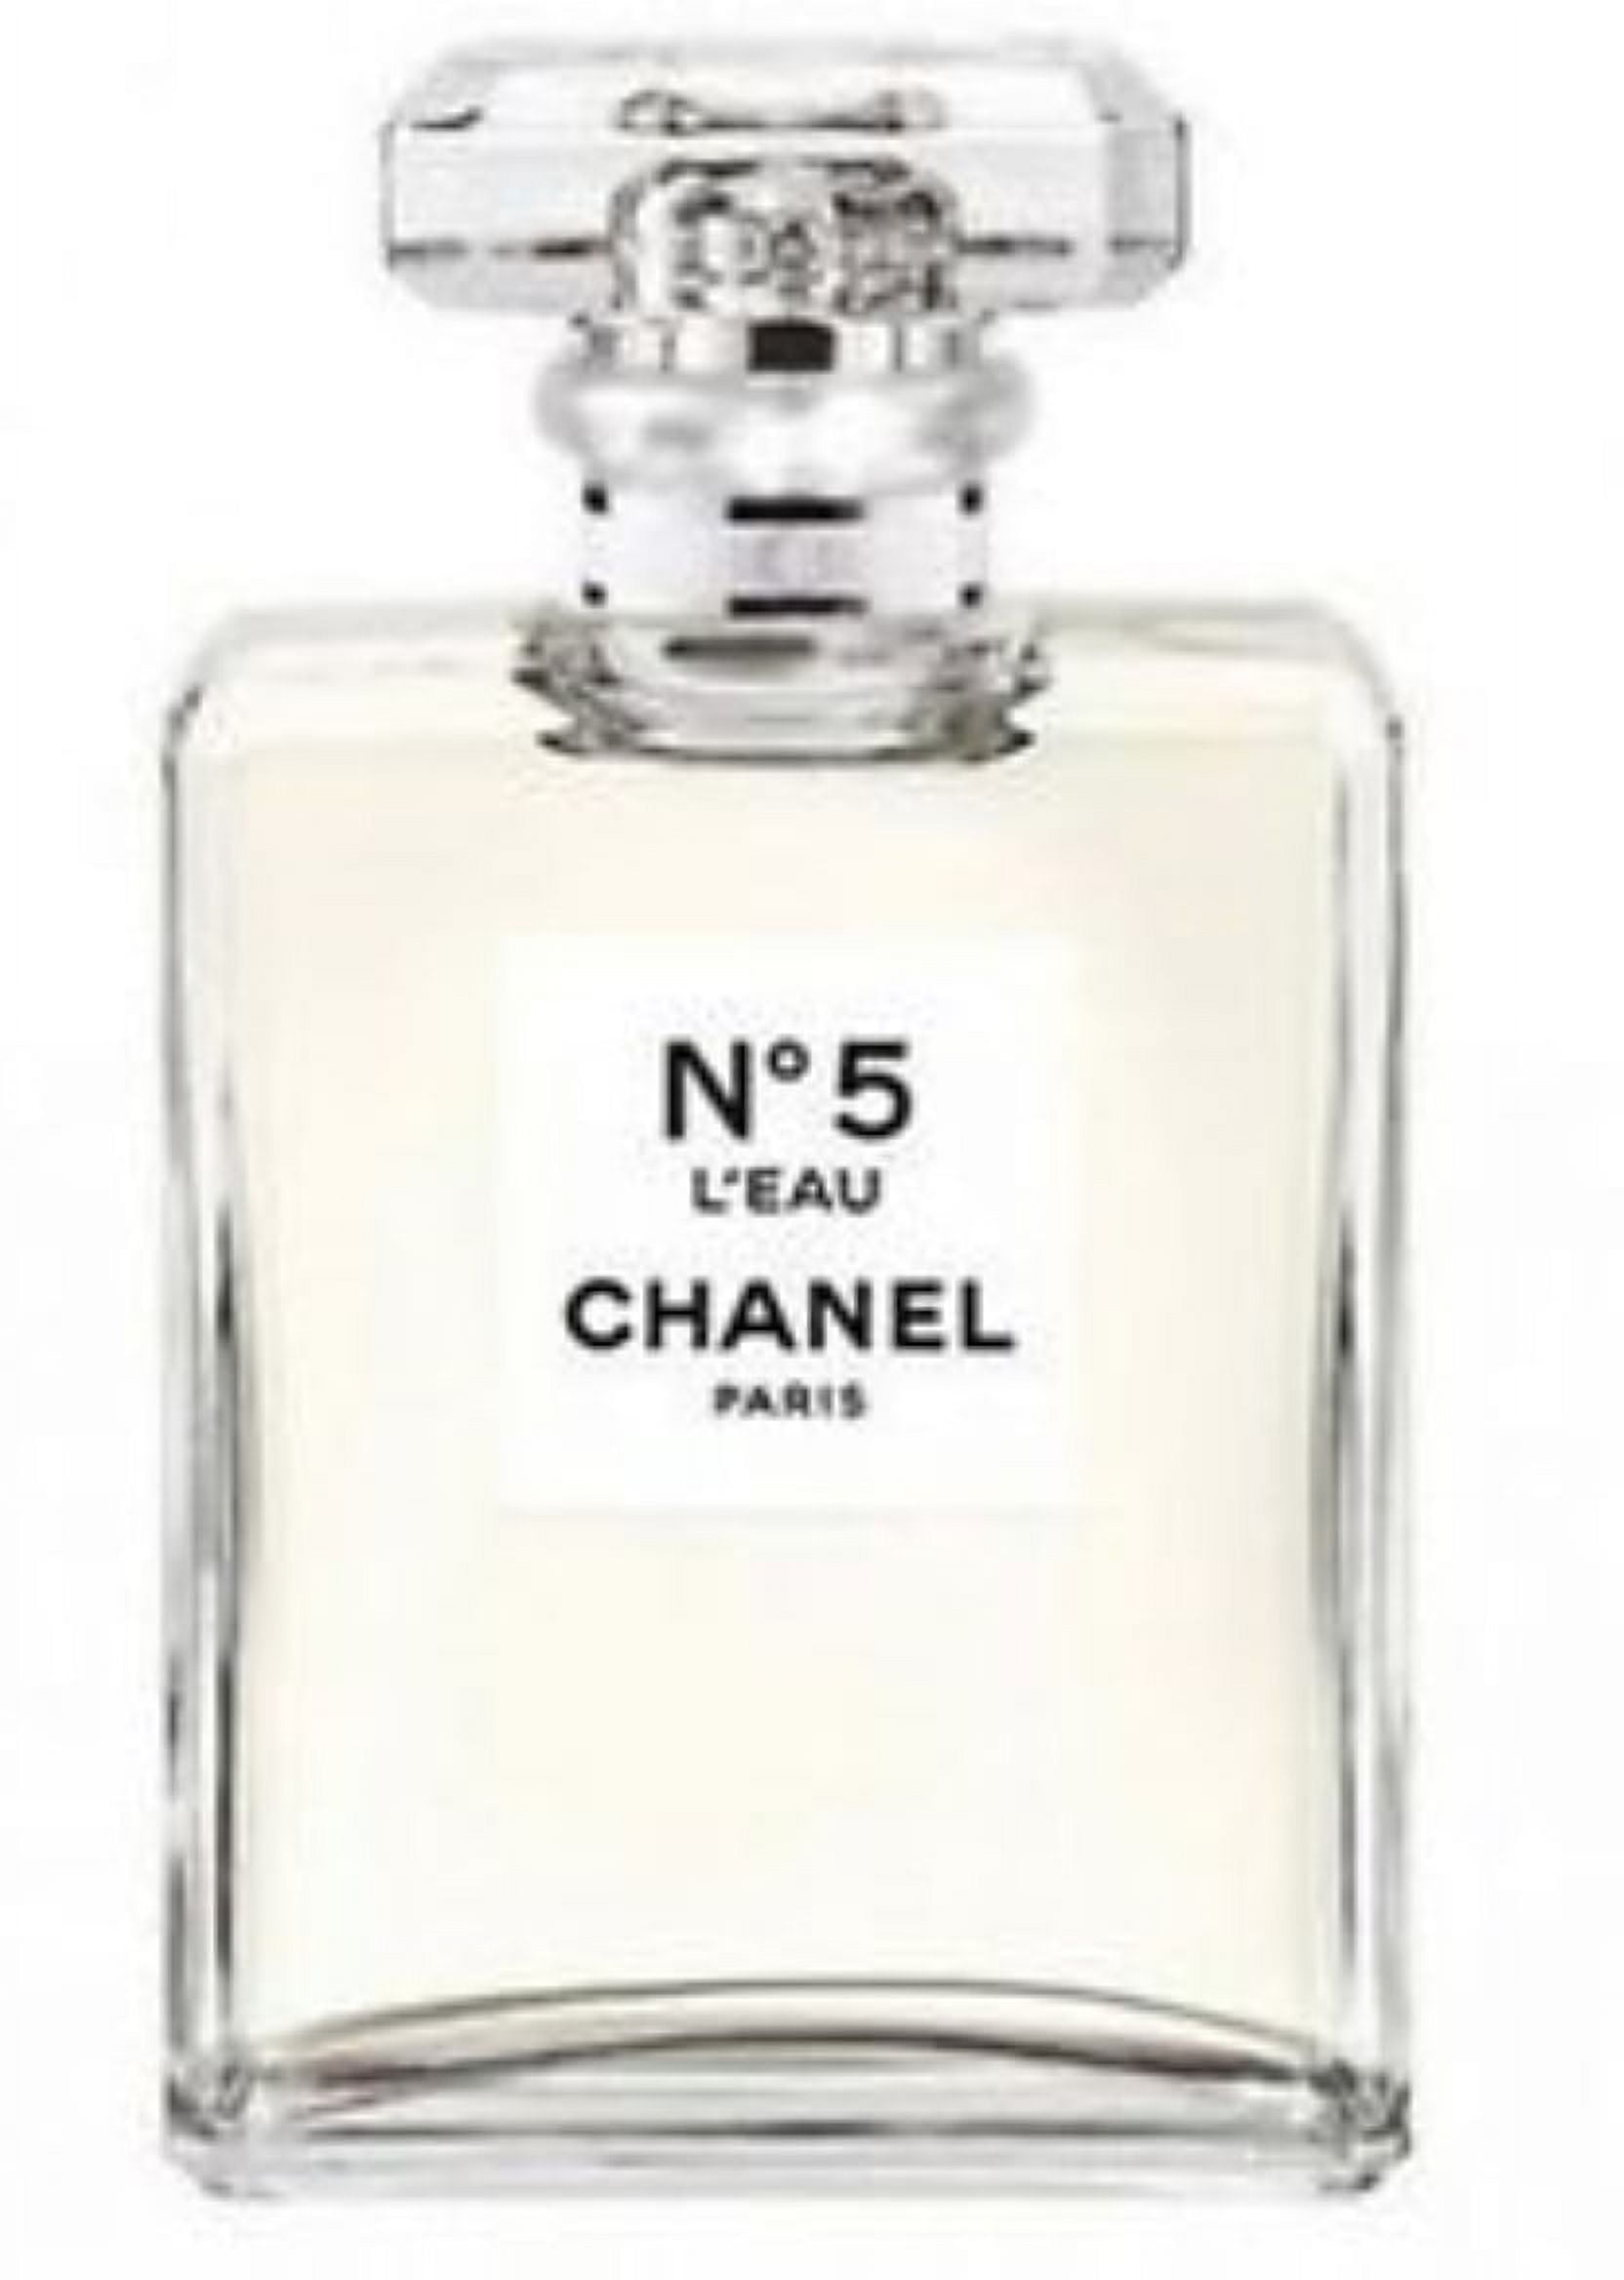 chanel purse perfume